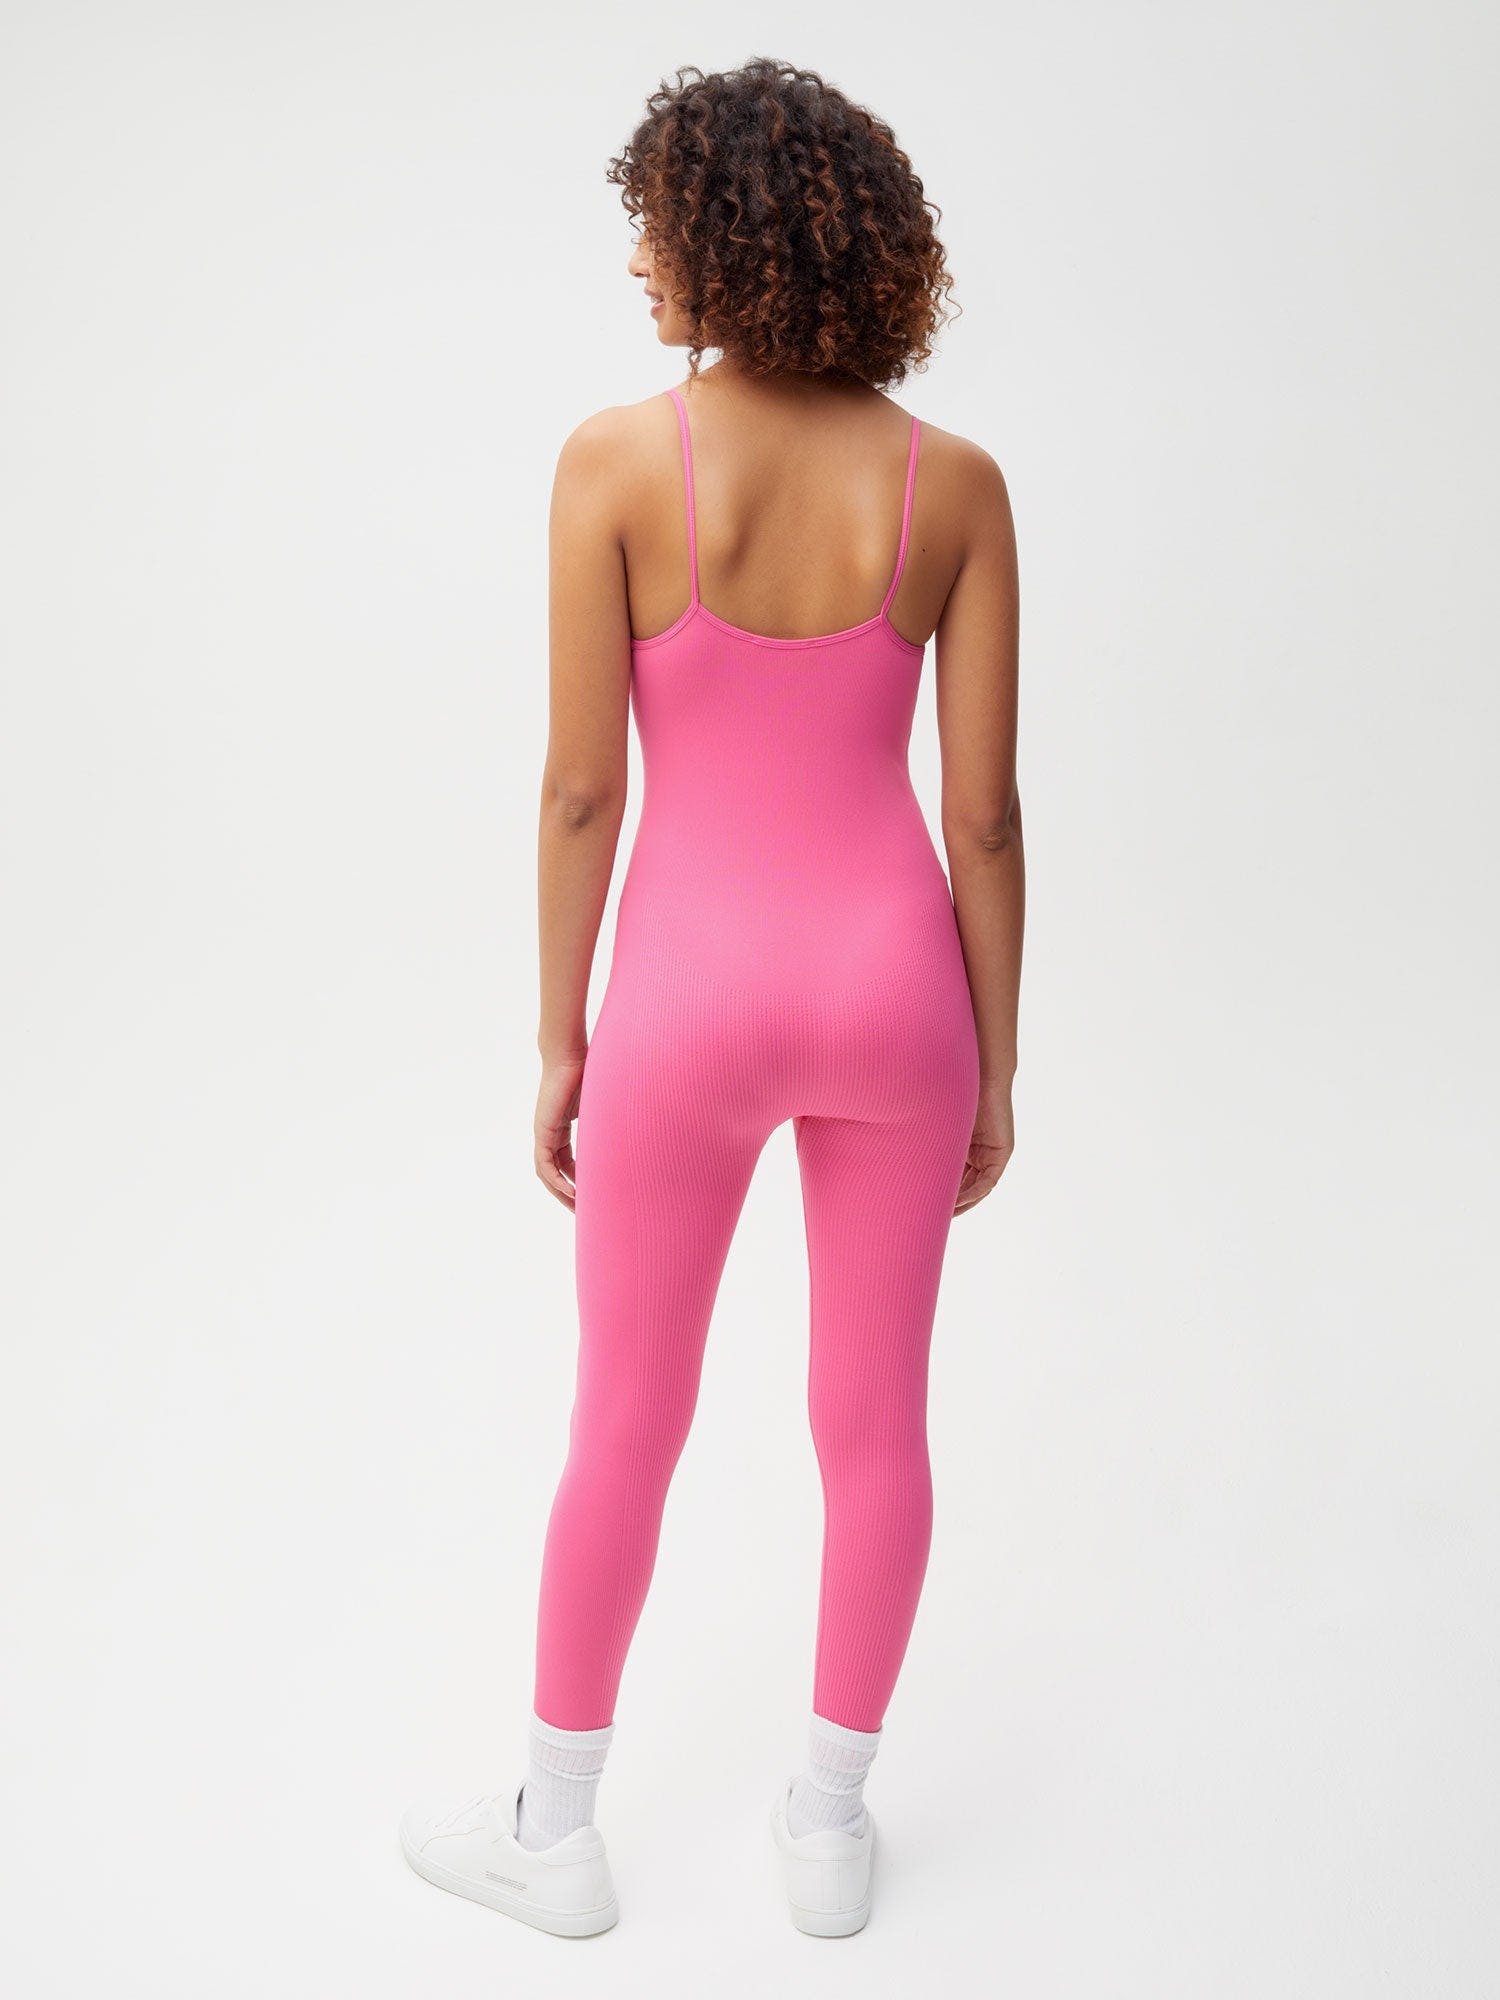 https://cdn.shopify.com/s/files/1/0035/1309/0115/products/Activewear-Womens-Jumpsuit-Flamingo-Pink-2_f6bcc789-0bc4-4f3c-b9df-b18058beb13c.jpg?v=1662475876